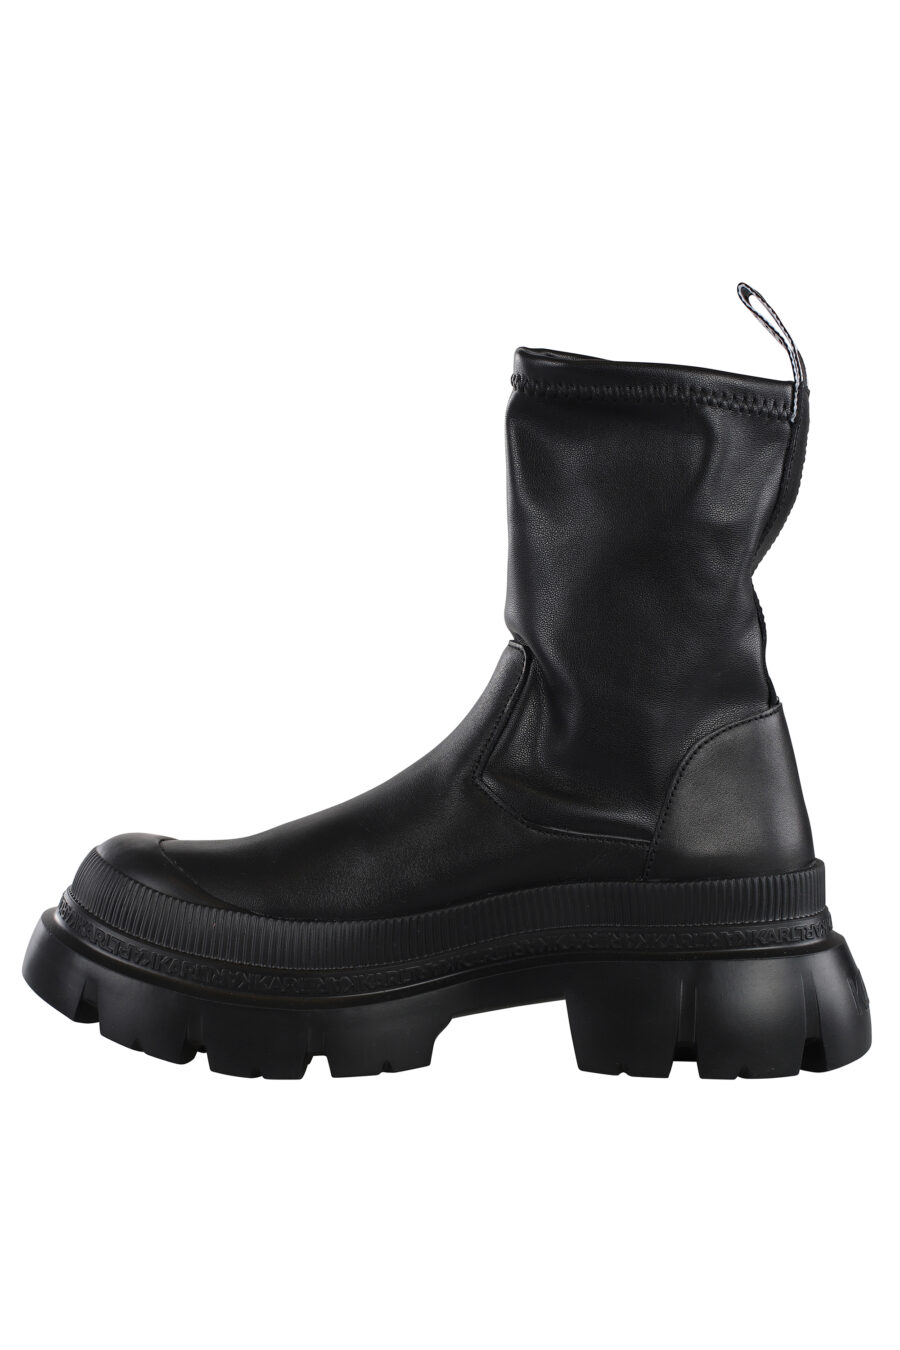 Schwarze Ankle Boots mit schwarzer Plateausohle - IMG 7146